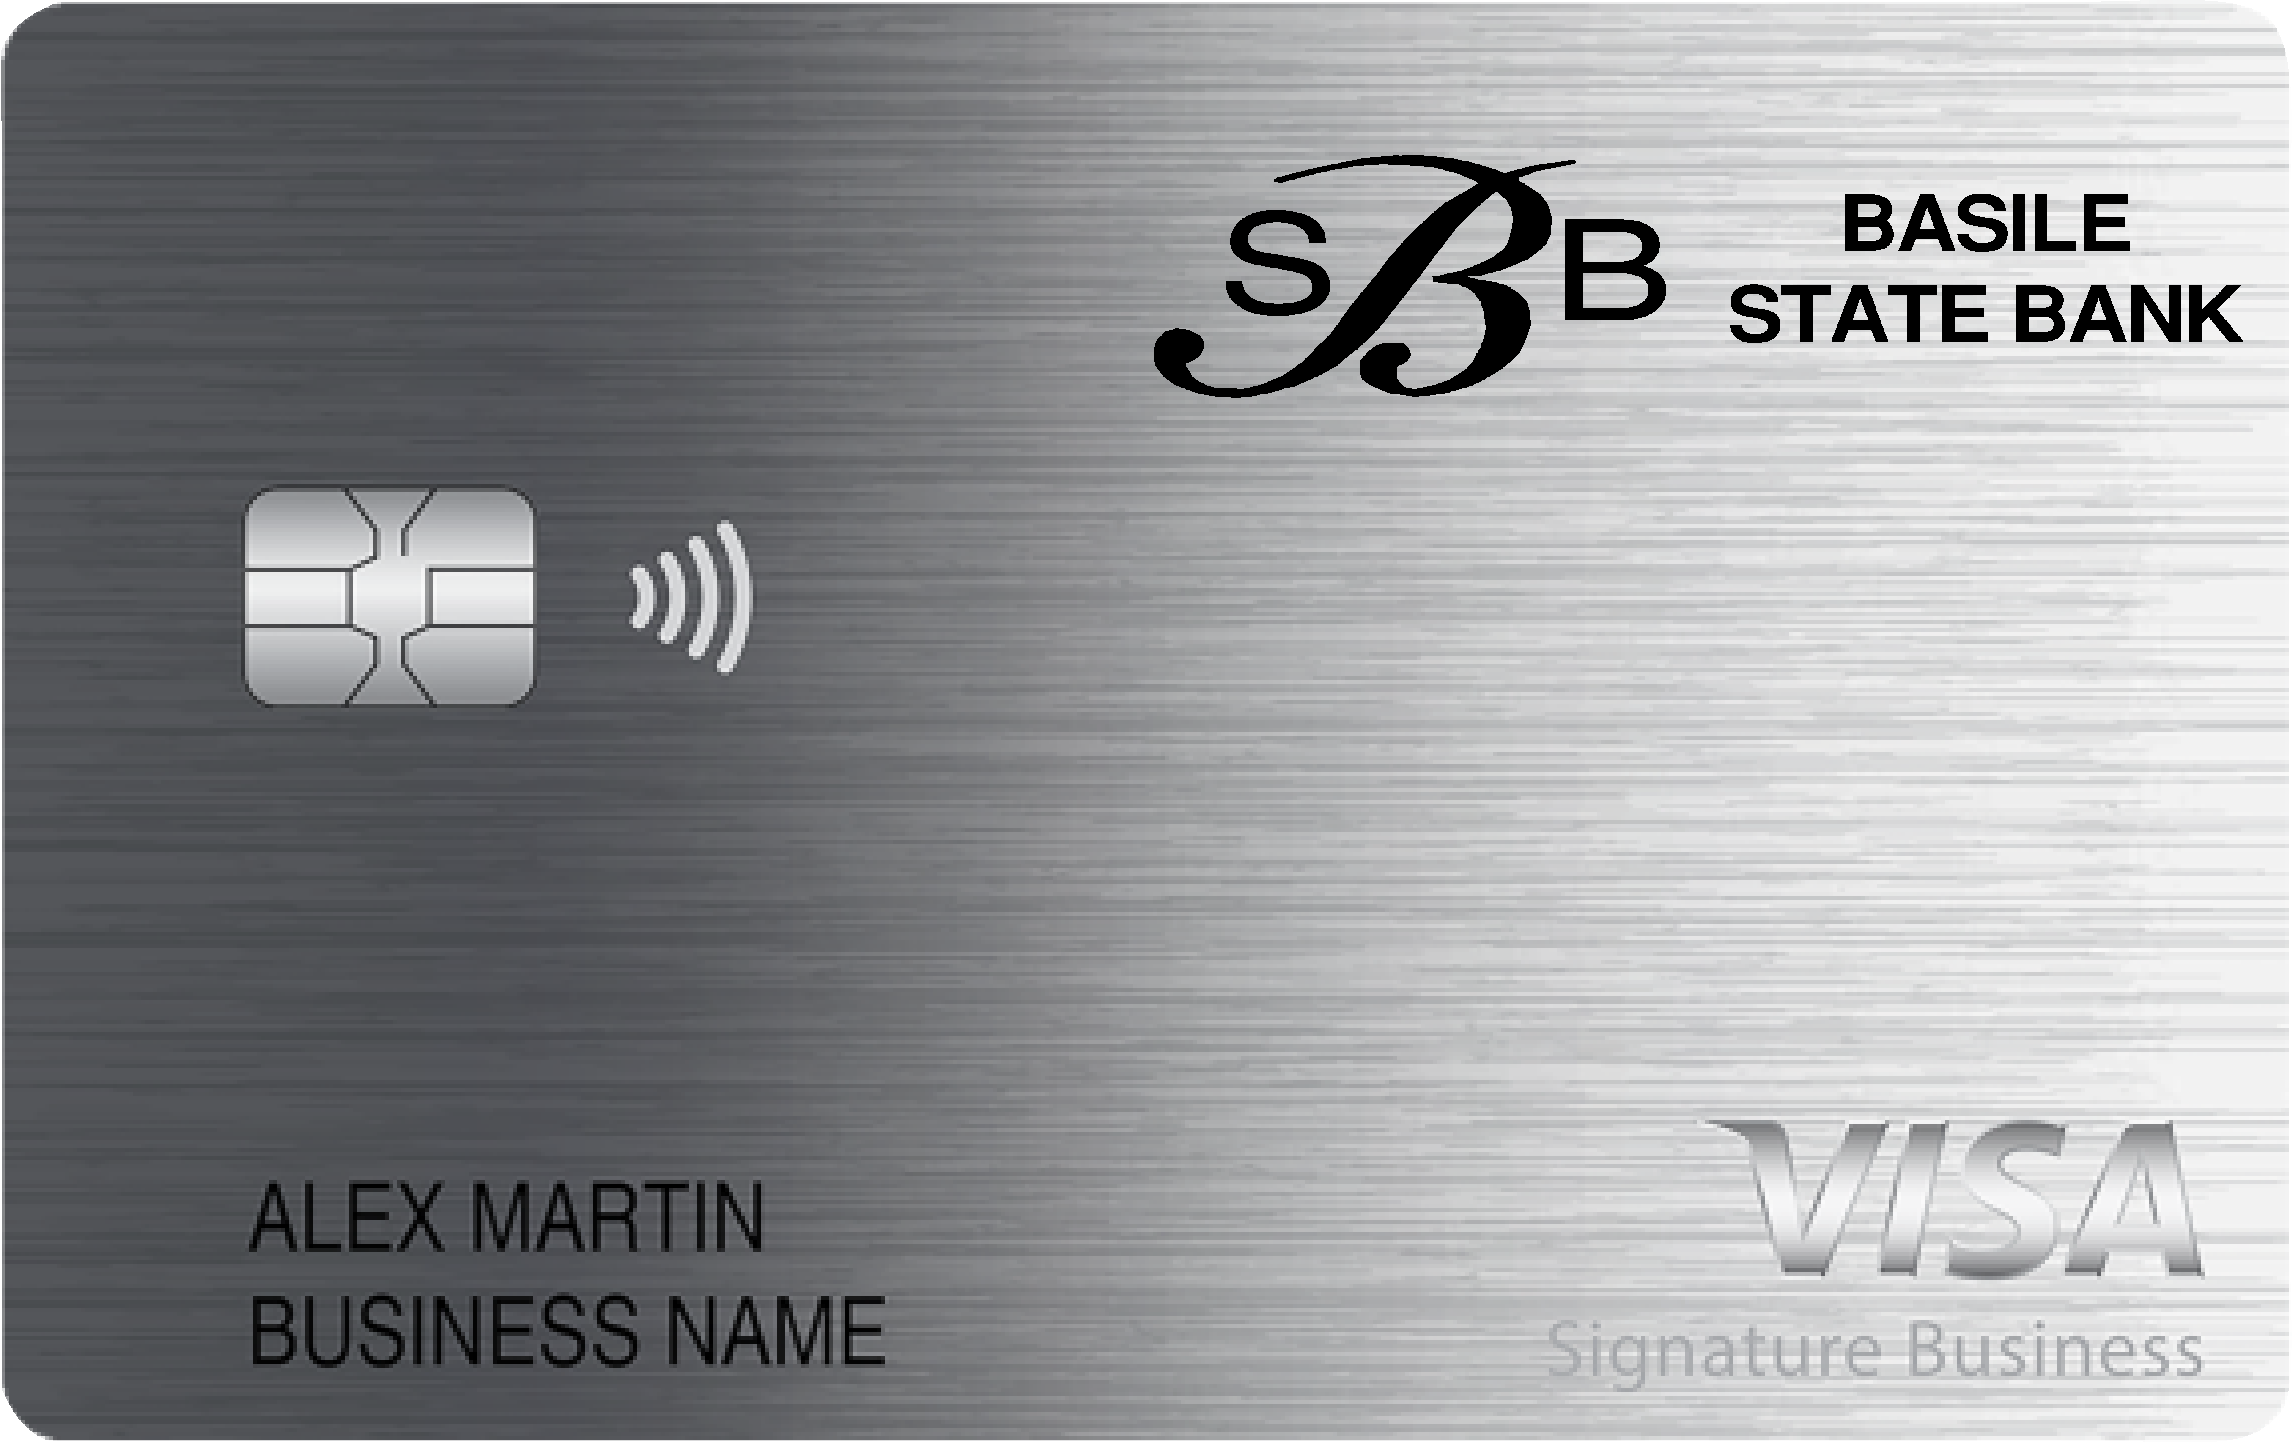 Basile State Bank Smart Business Rewards Card